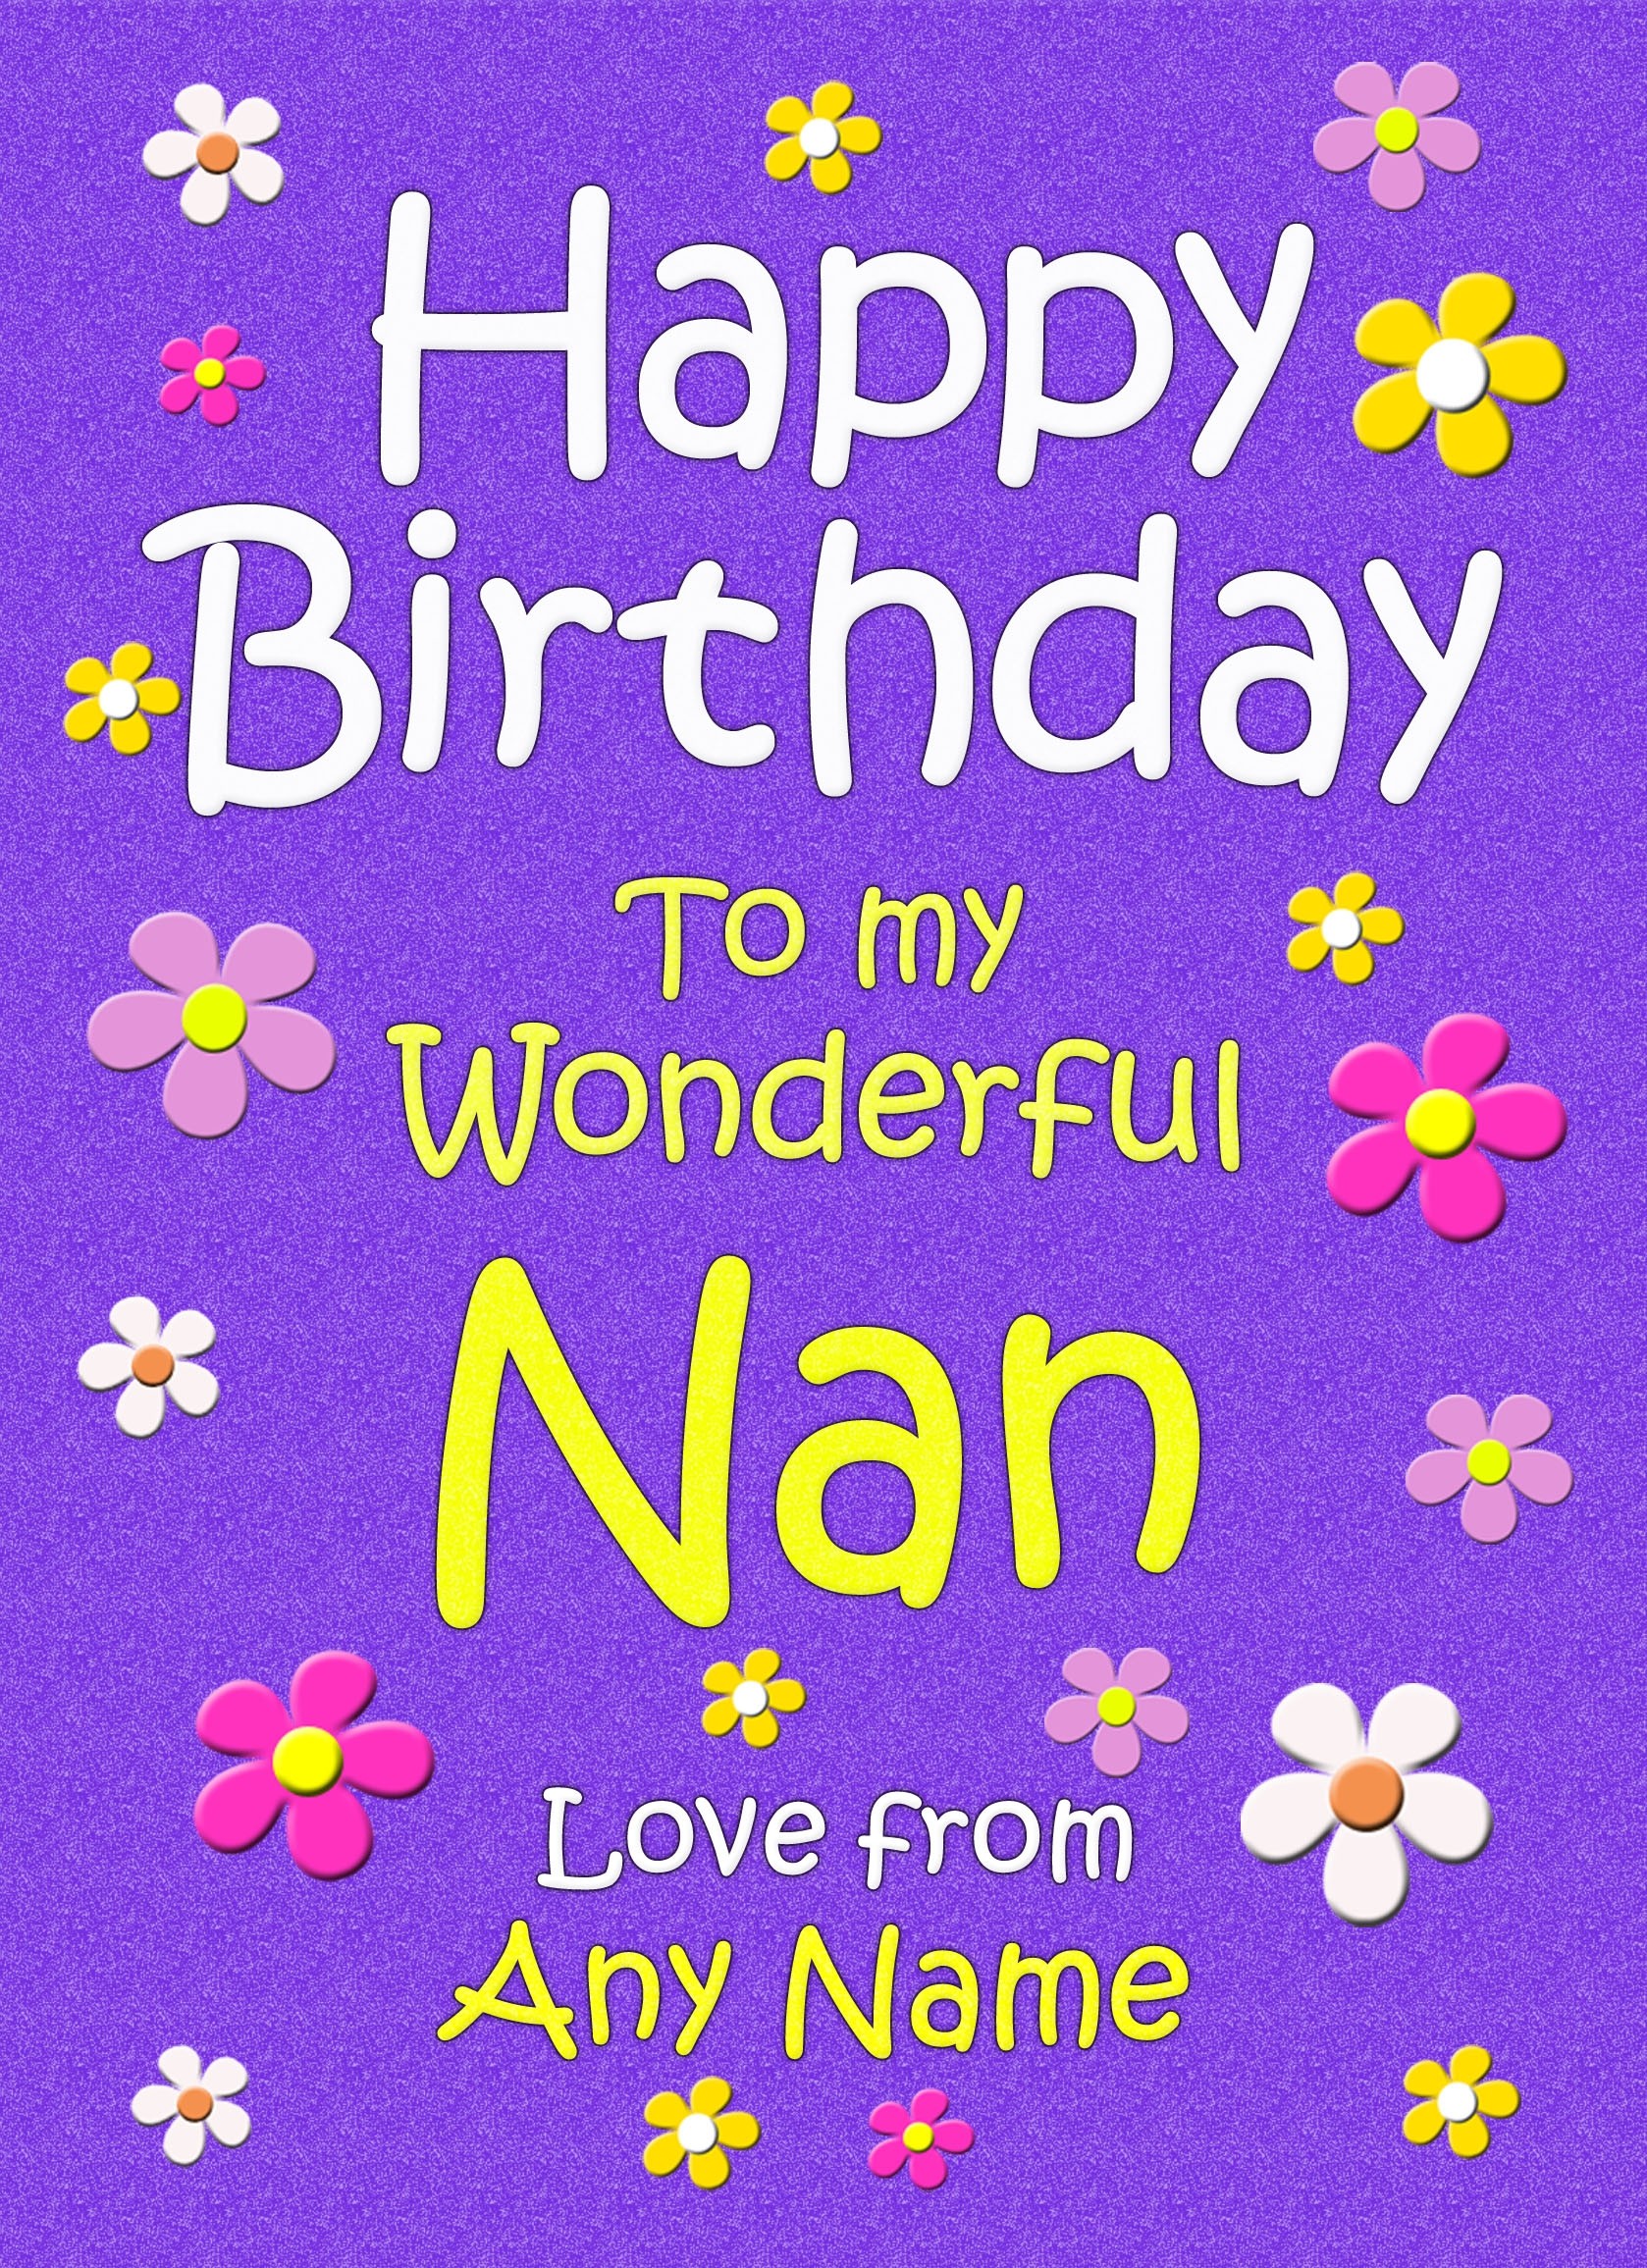 Personalised Nan Birthday Card (Purple)